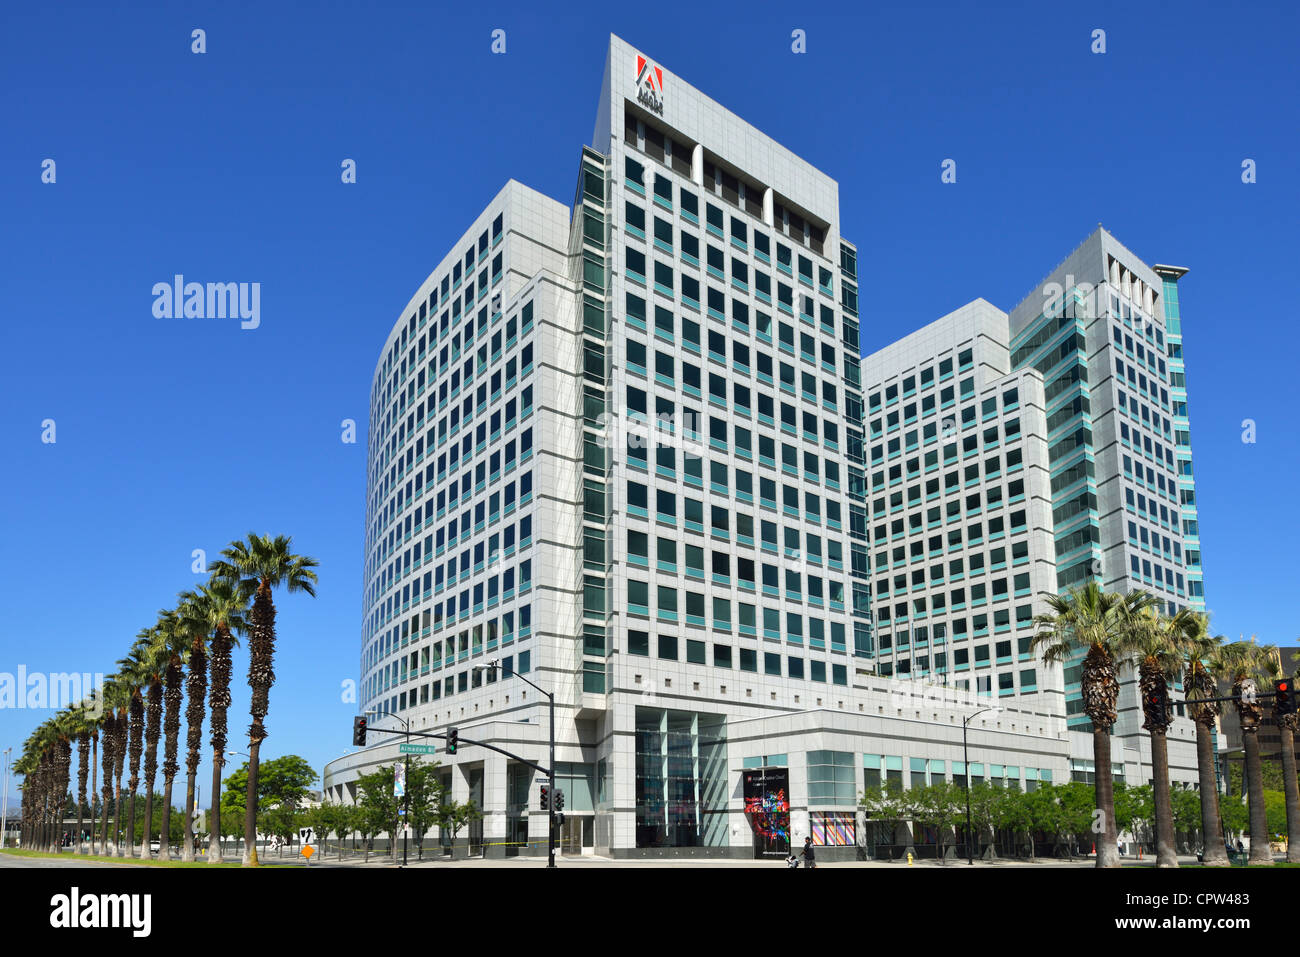 The Adobe Incorporated (ADBE) headquarters in Silicon Valley, San Jose CA Stock Photo